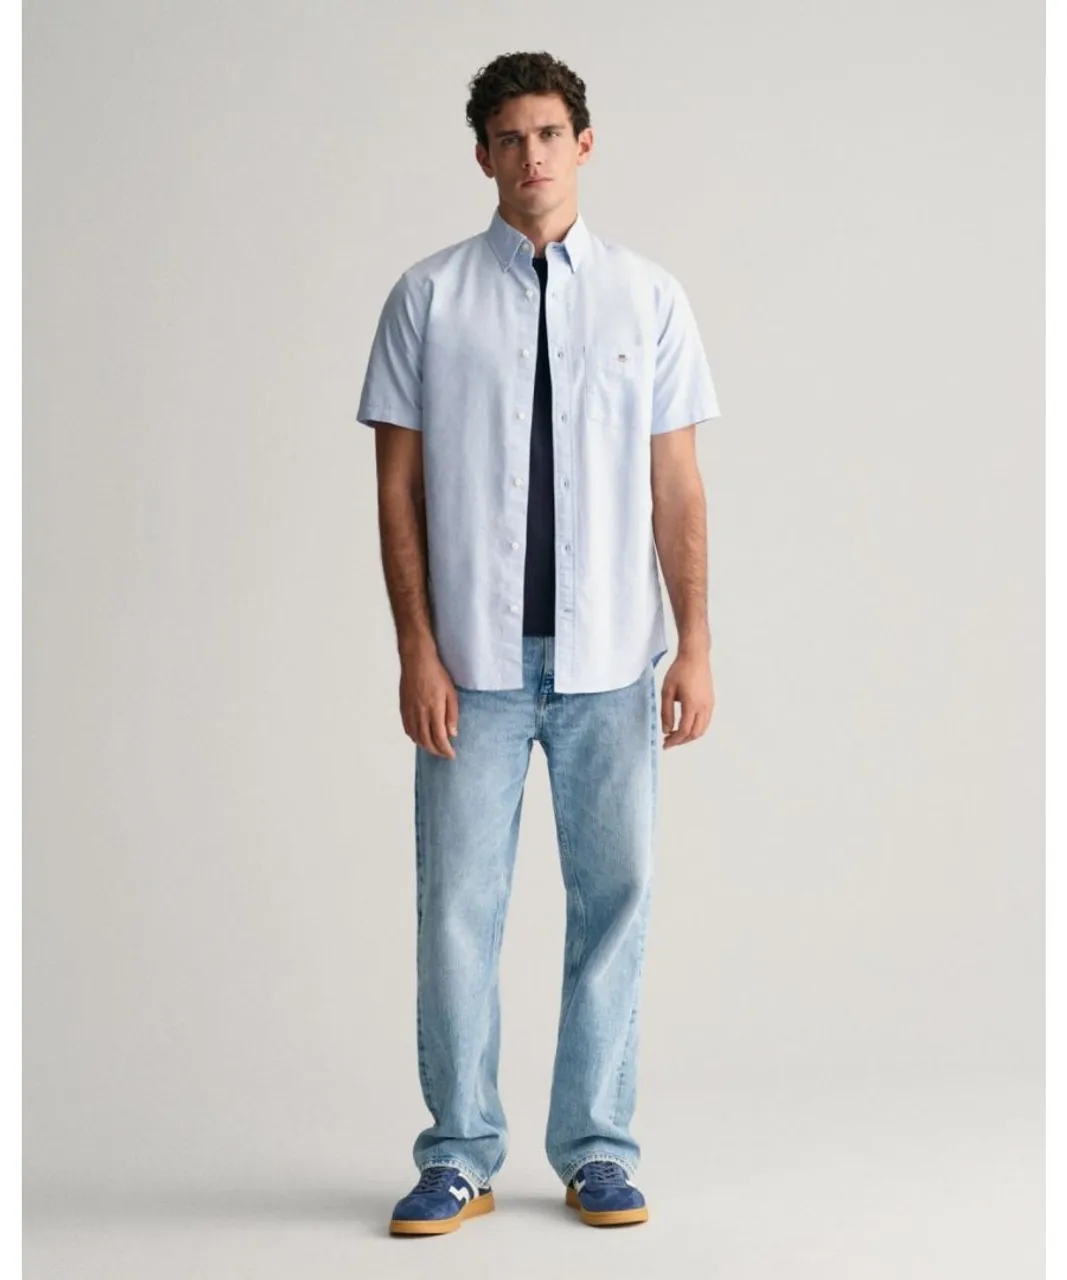 Gant Mens Regular Fit Short Sleeve Oxford Shirt - Blue